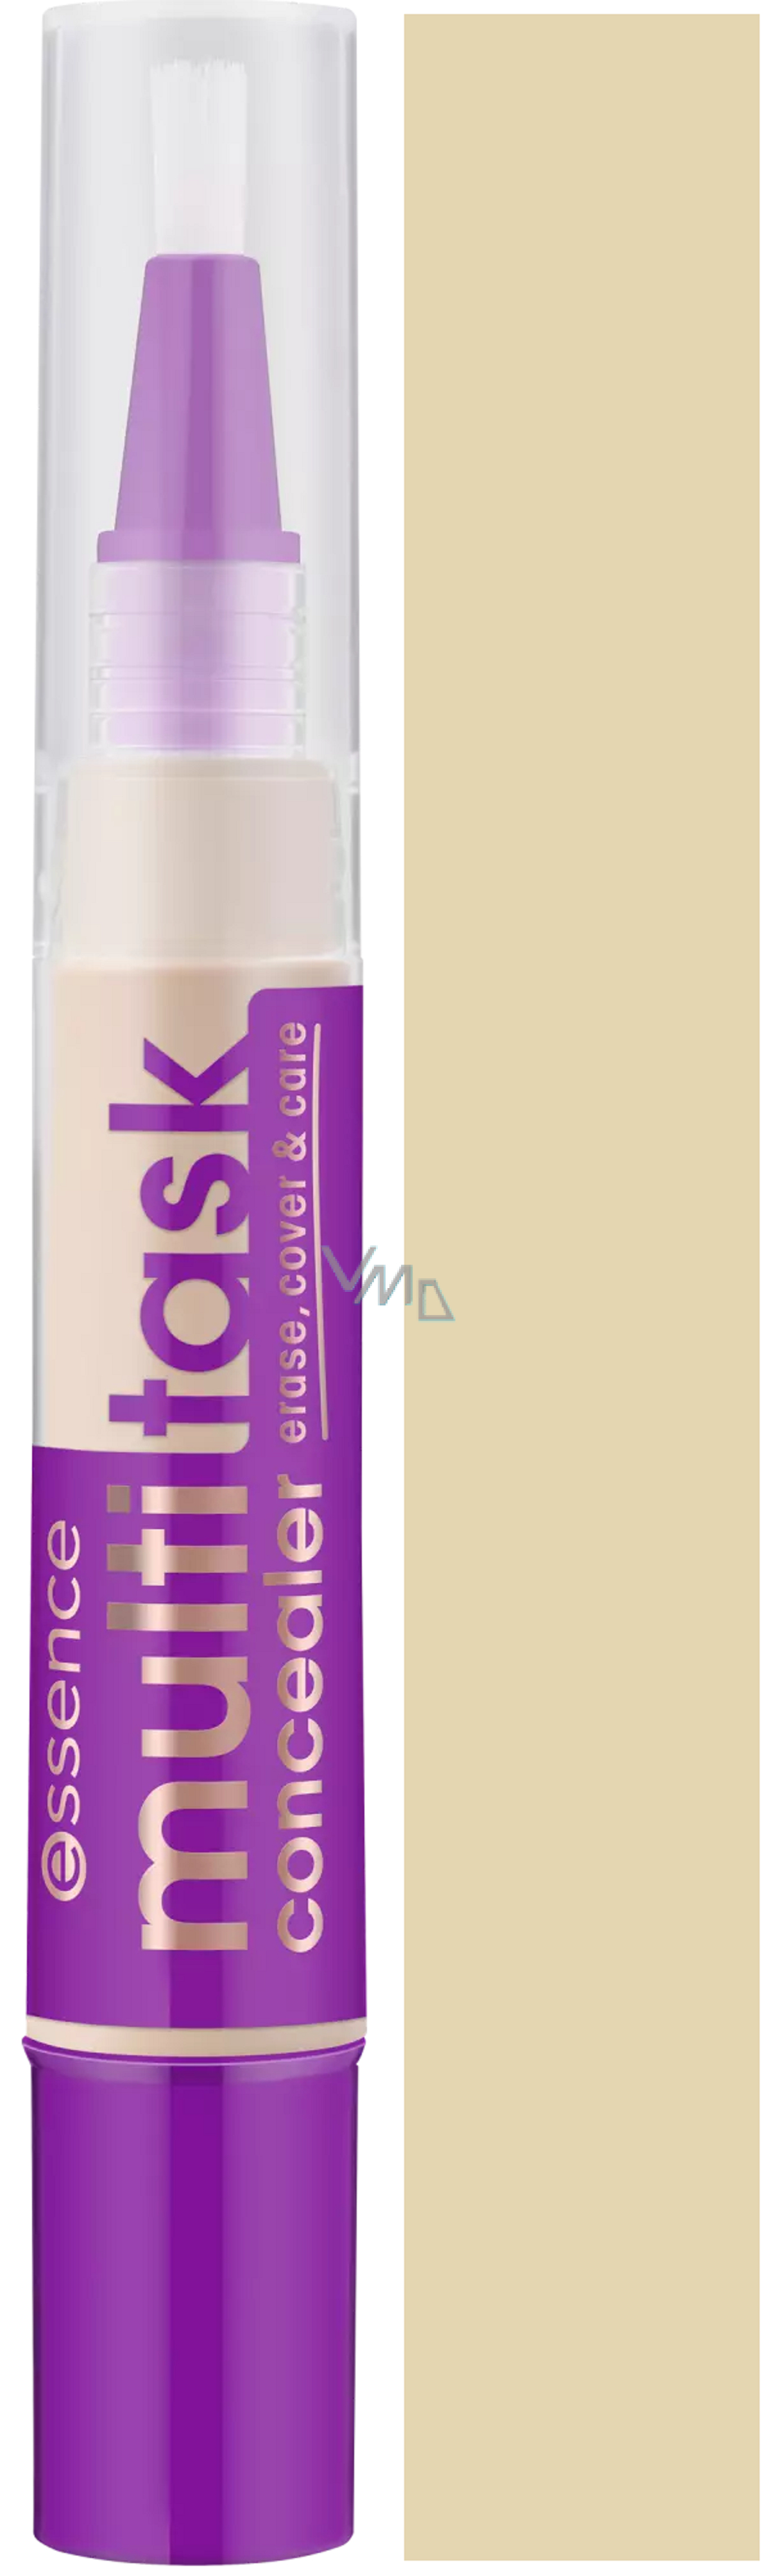 Essence Multitask Concealer Natural - drogerie - 15 ml Liquid 3 parfumerie VMD Nude